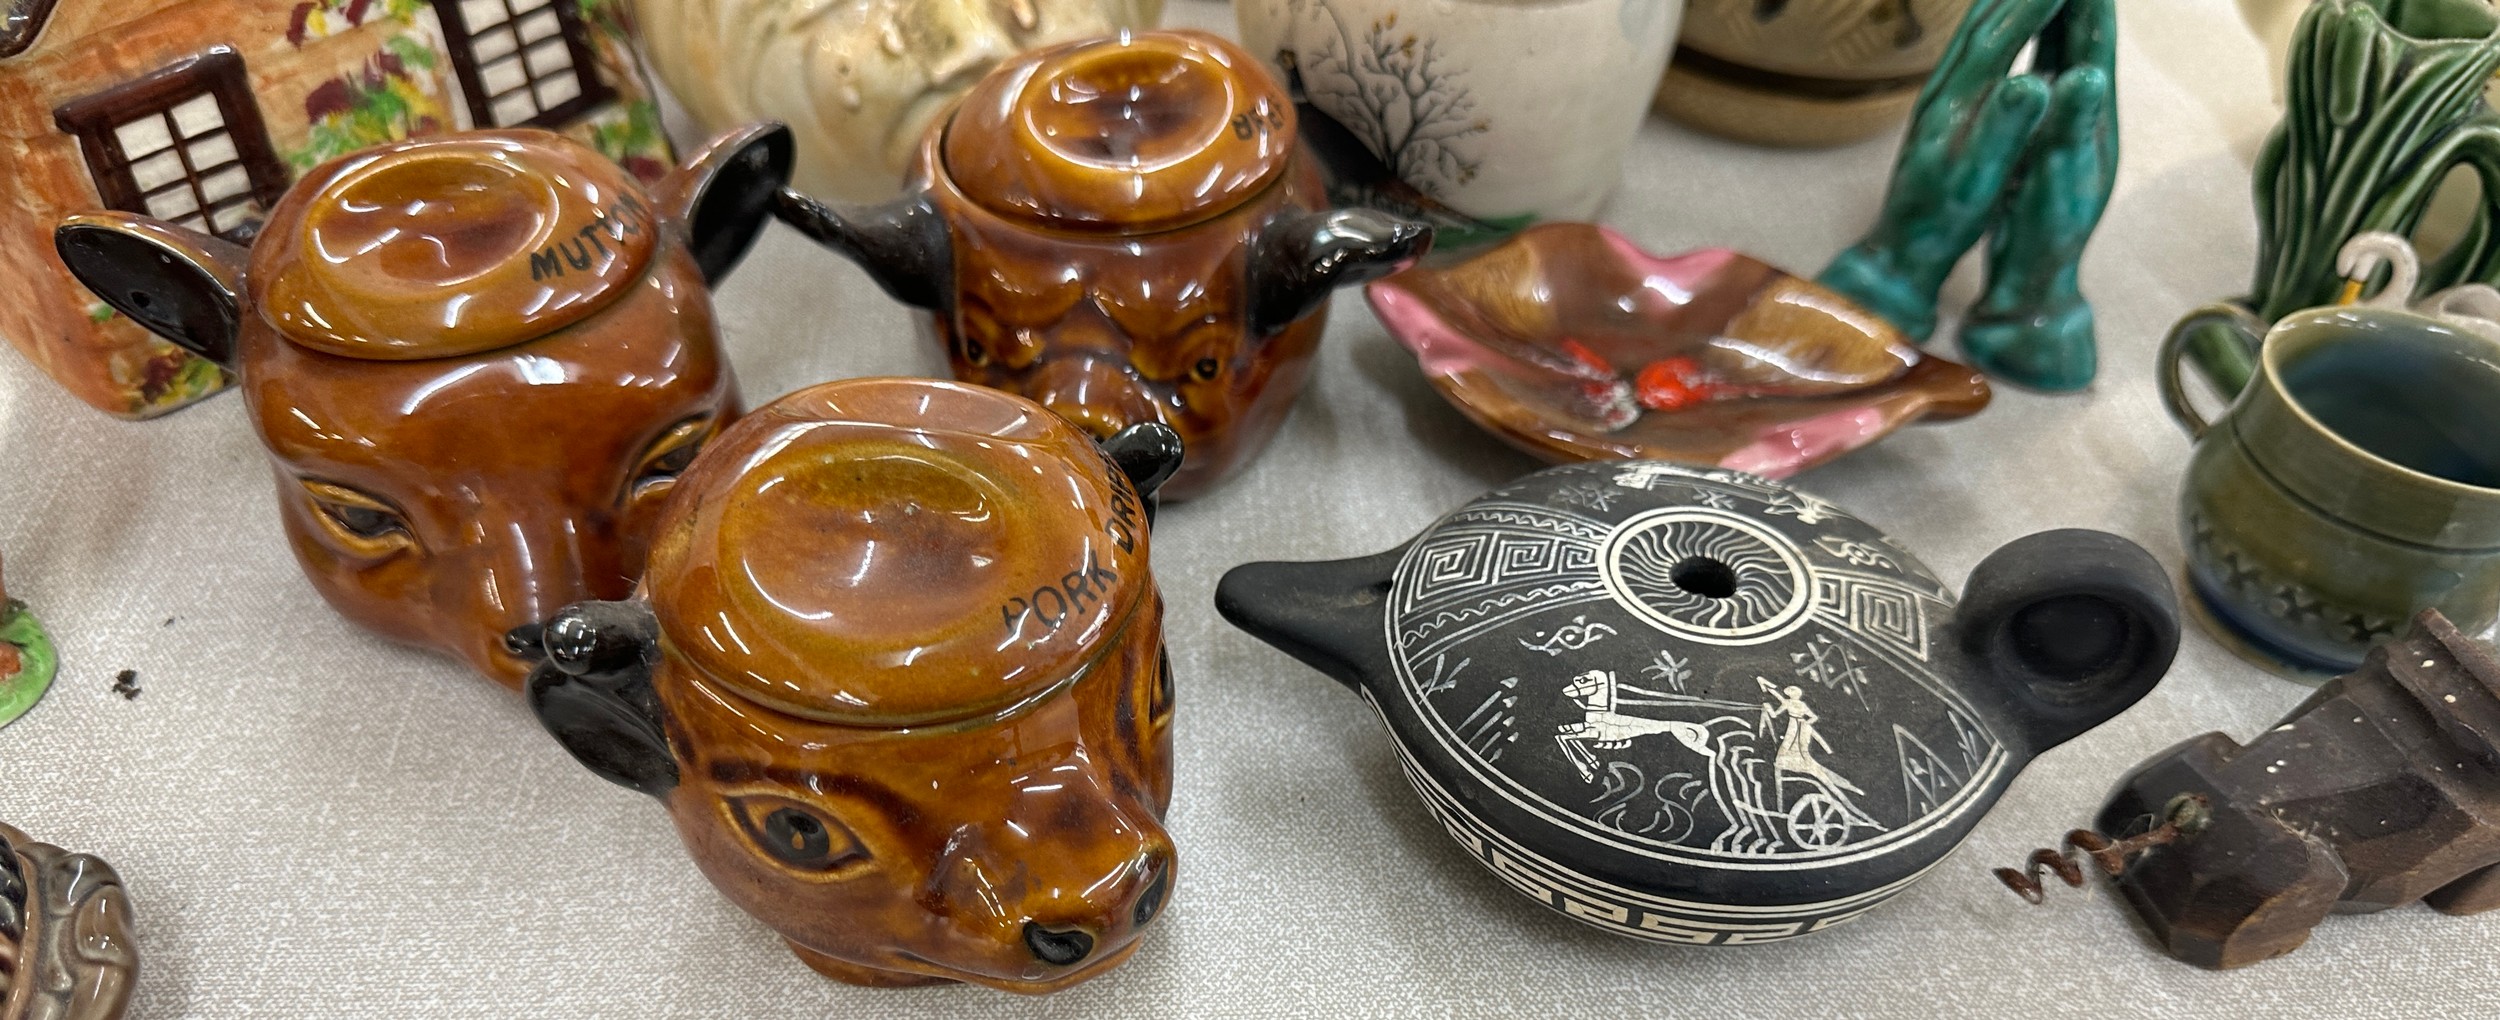 Selection of assorted pottery includes crown devon, sadler etc - Image 2 of 4